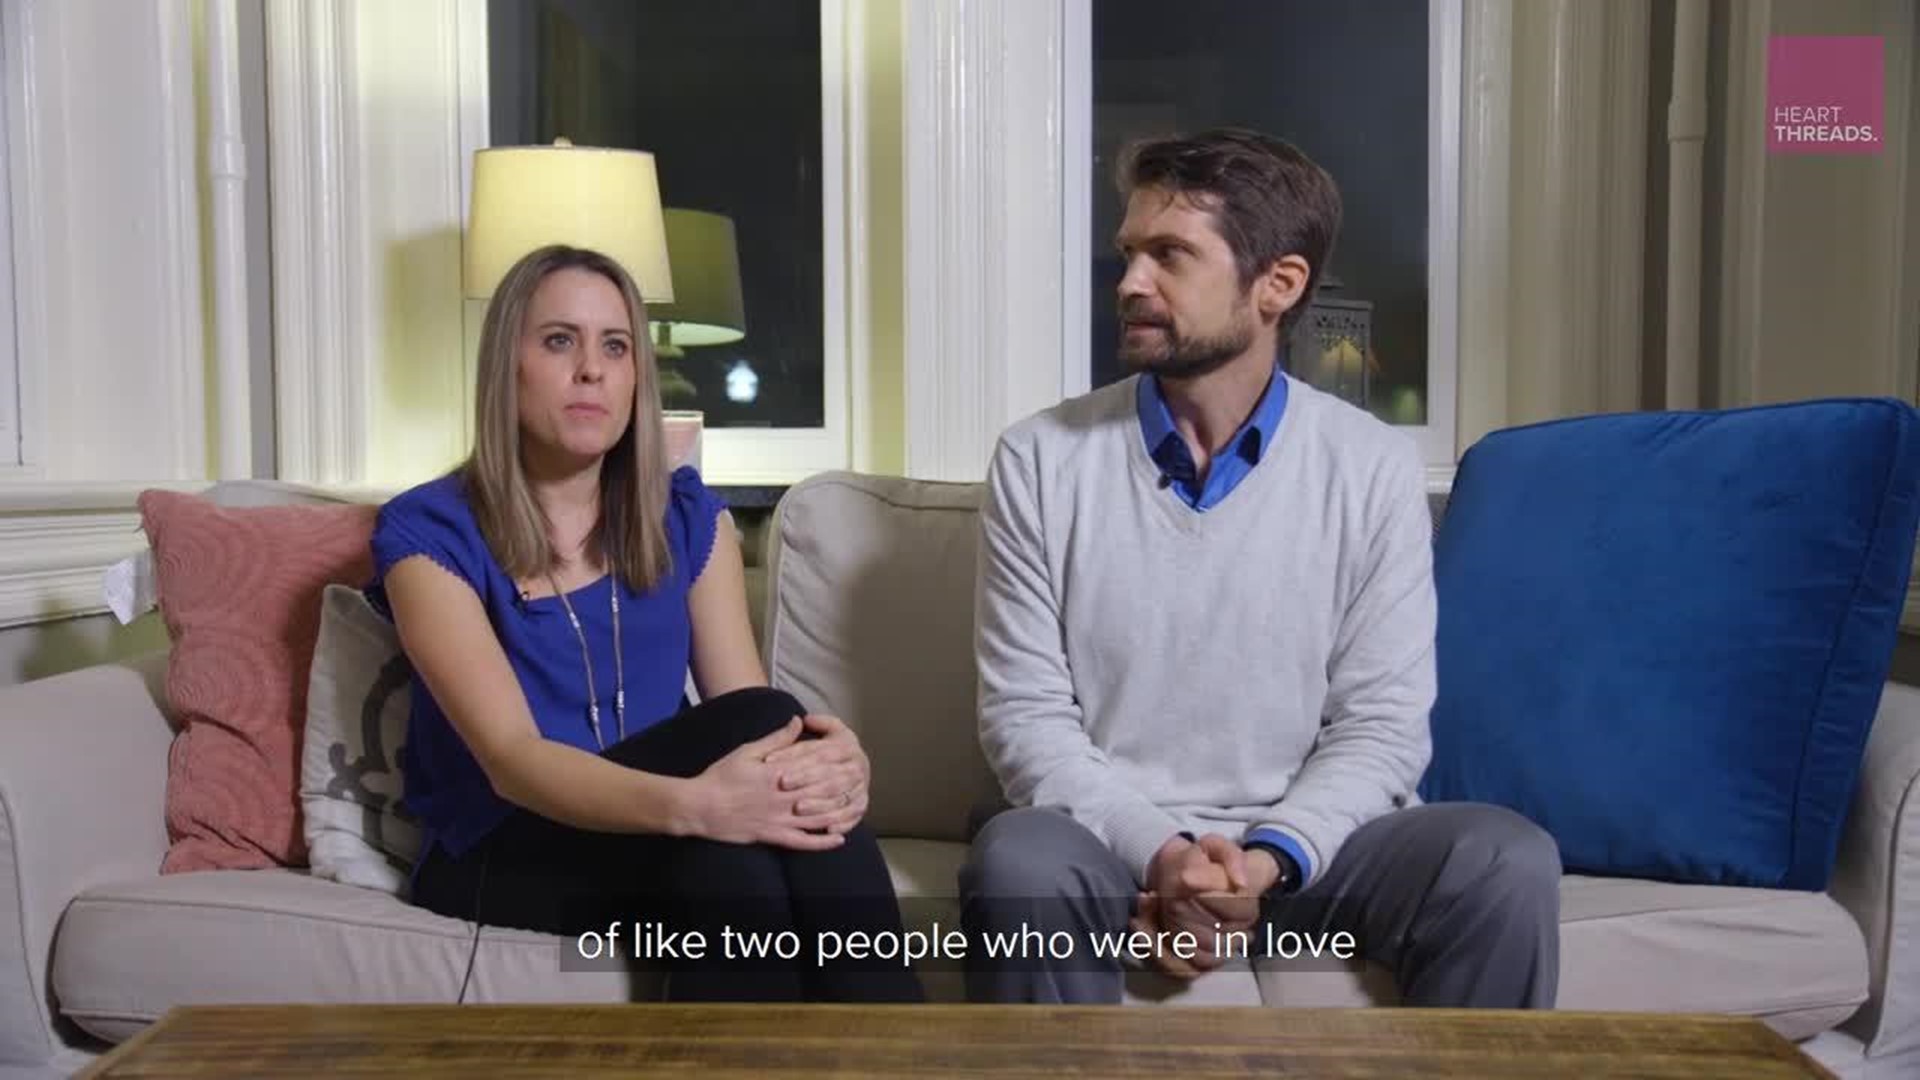 Washington, D.C. couple discuss recovery process after husband suffered traumatic brain injury